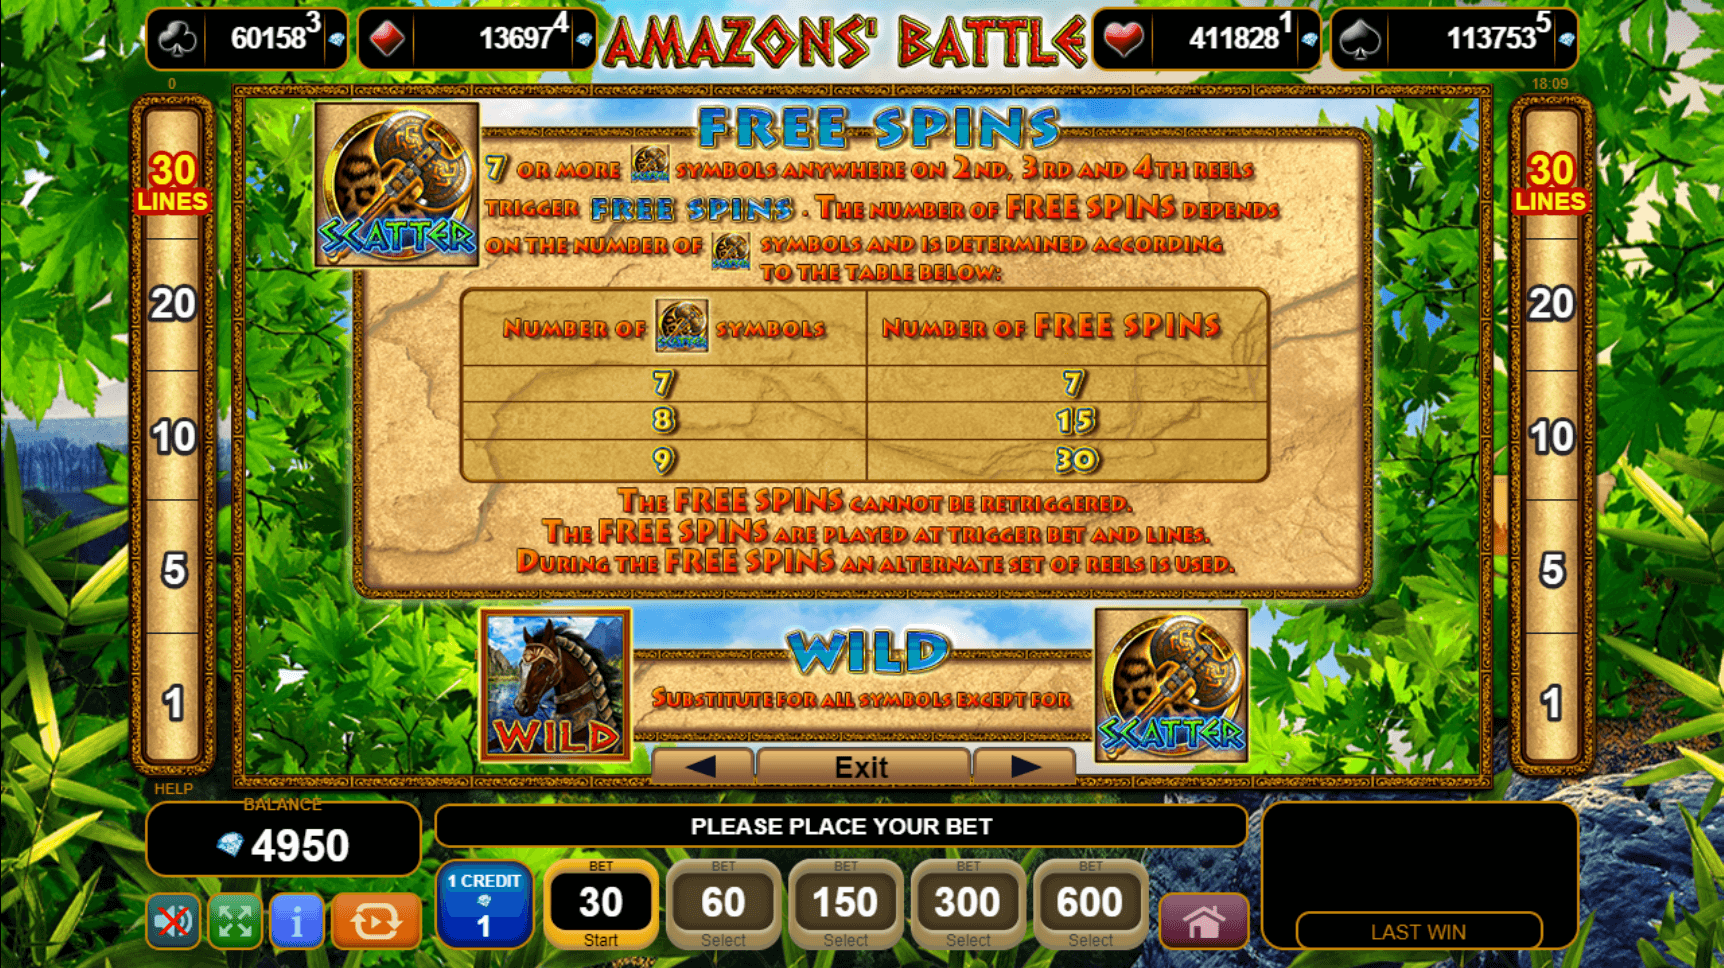 50 amazons battle slot machine detail image 2